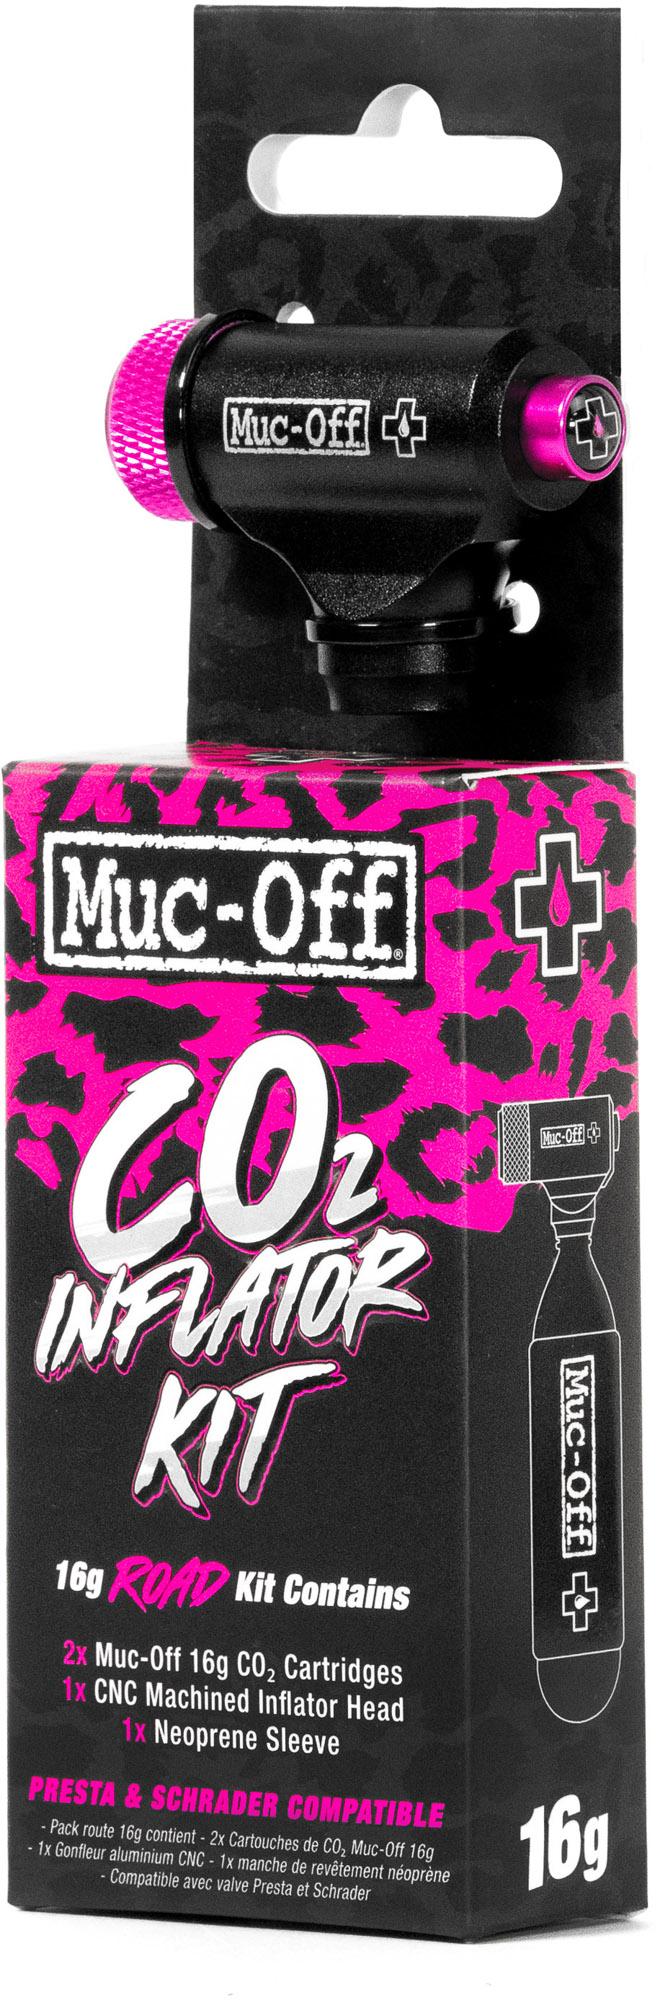 Muc-off Road Co2 Cartridge Inflator Kit  Black